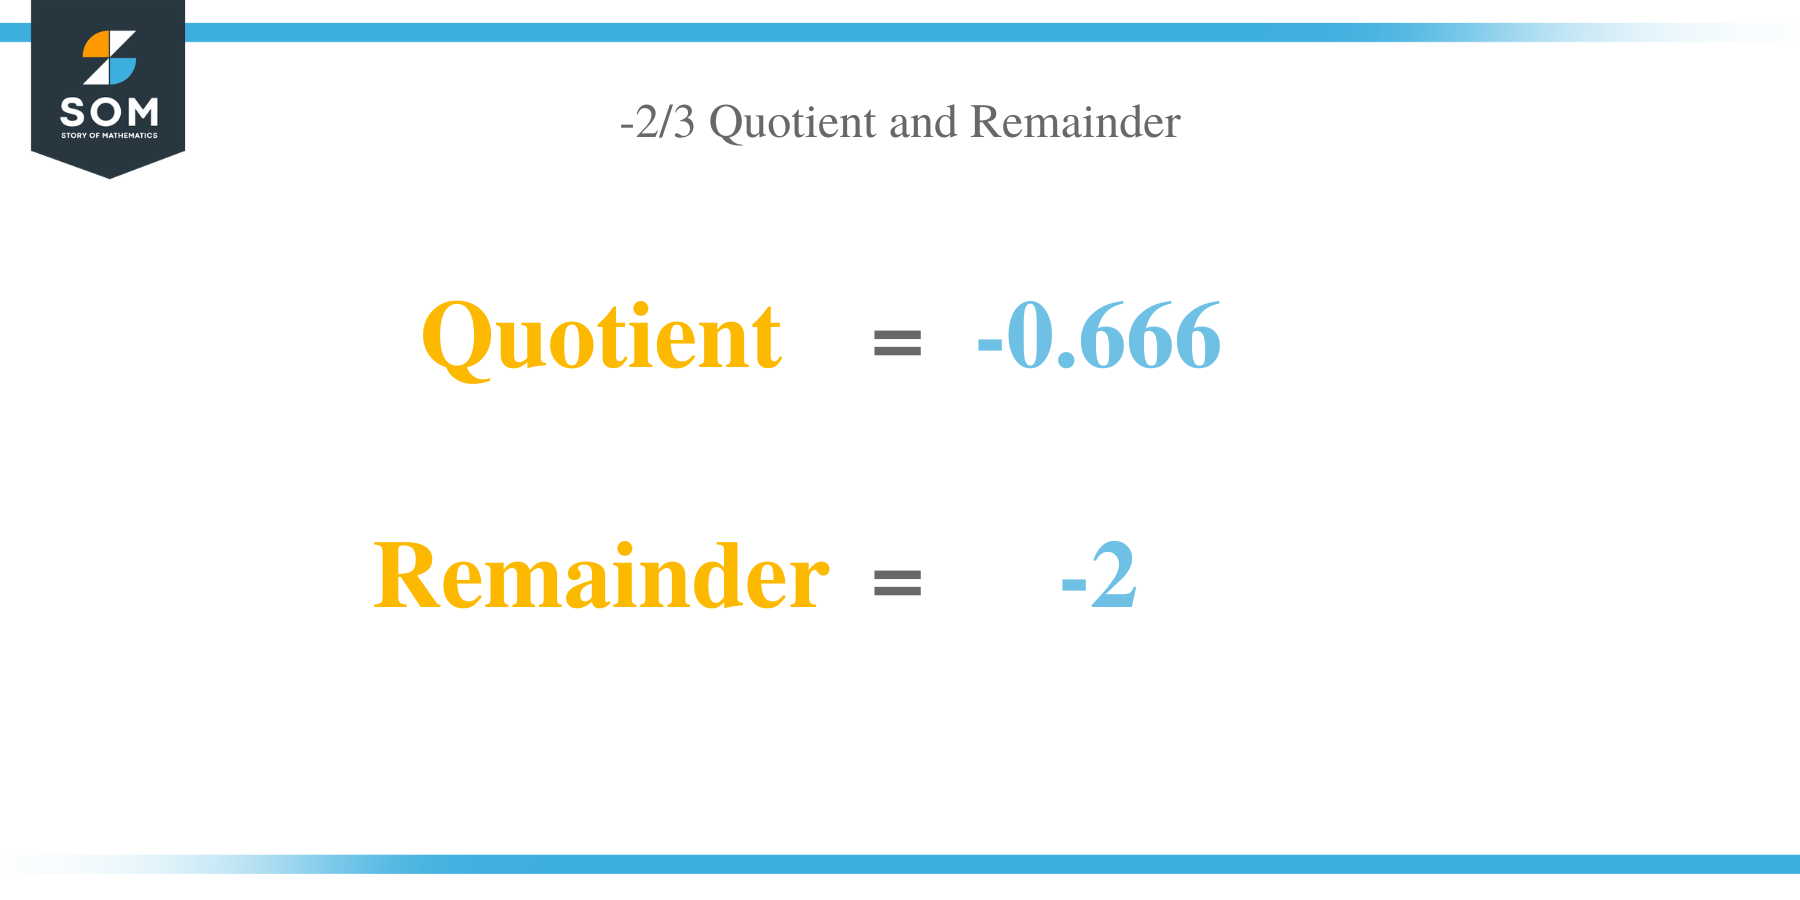 Quotient and remainder of 2 per 3